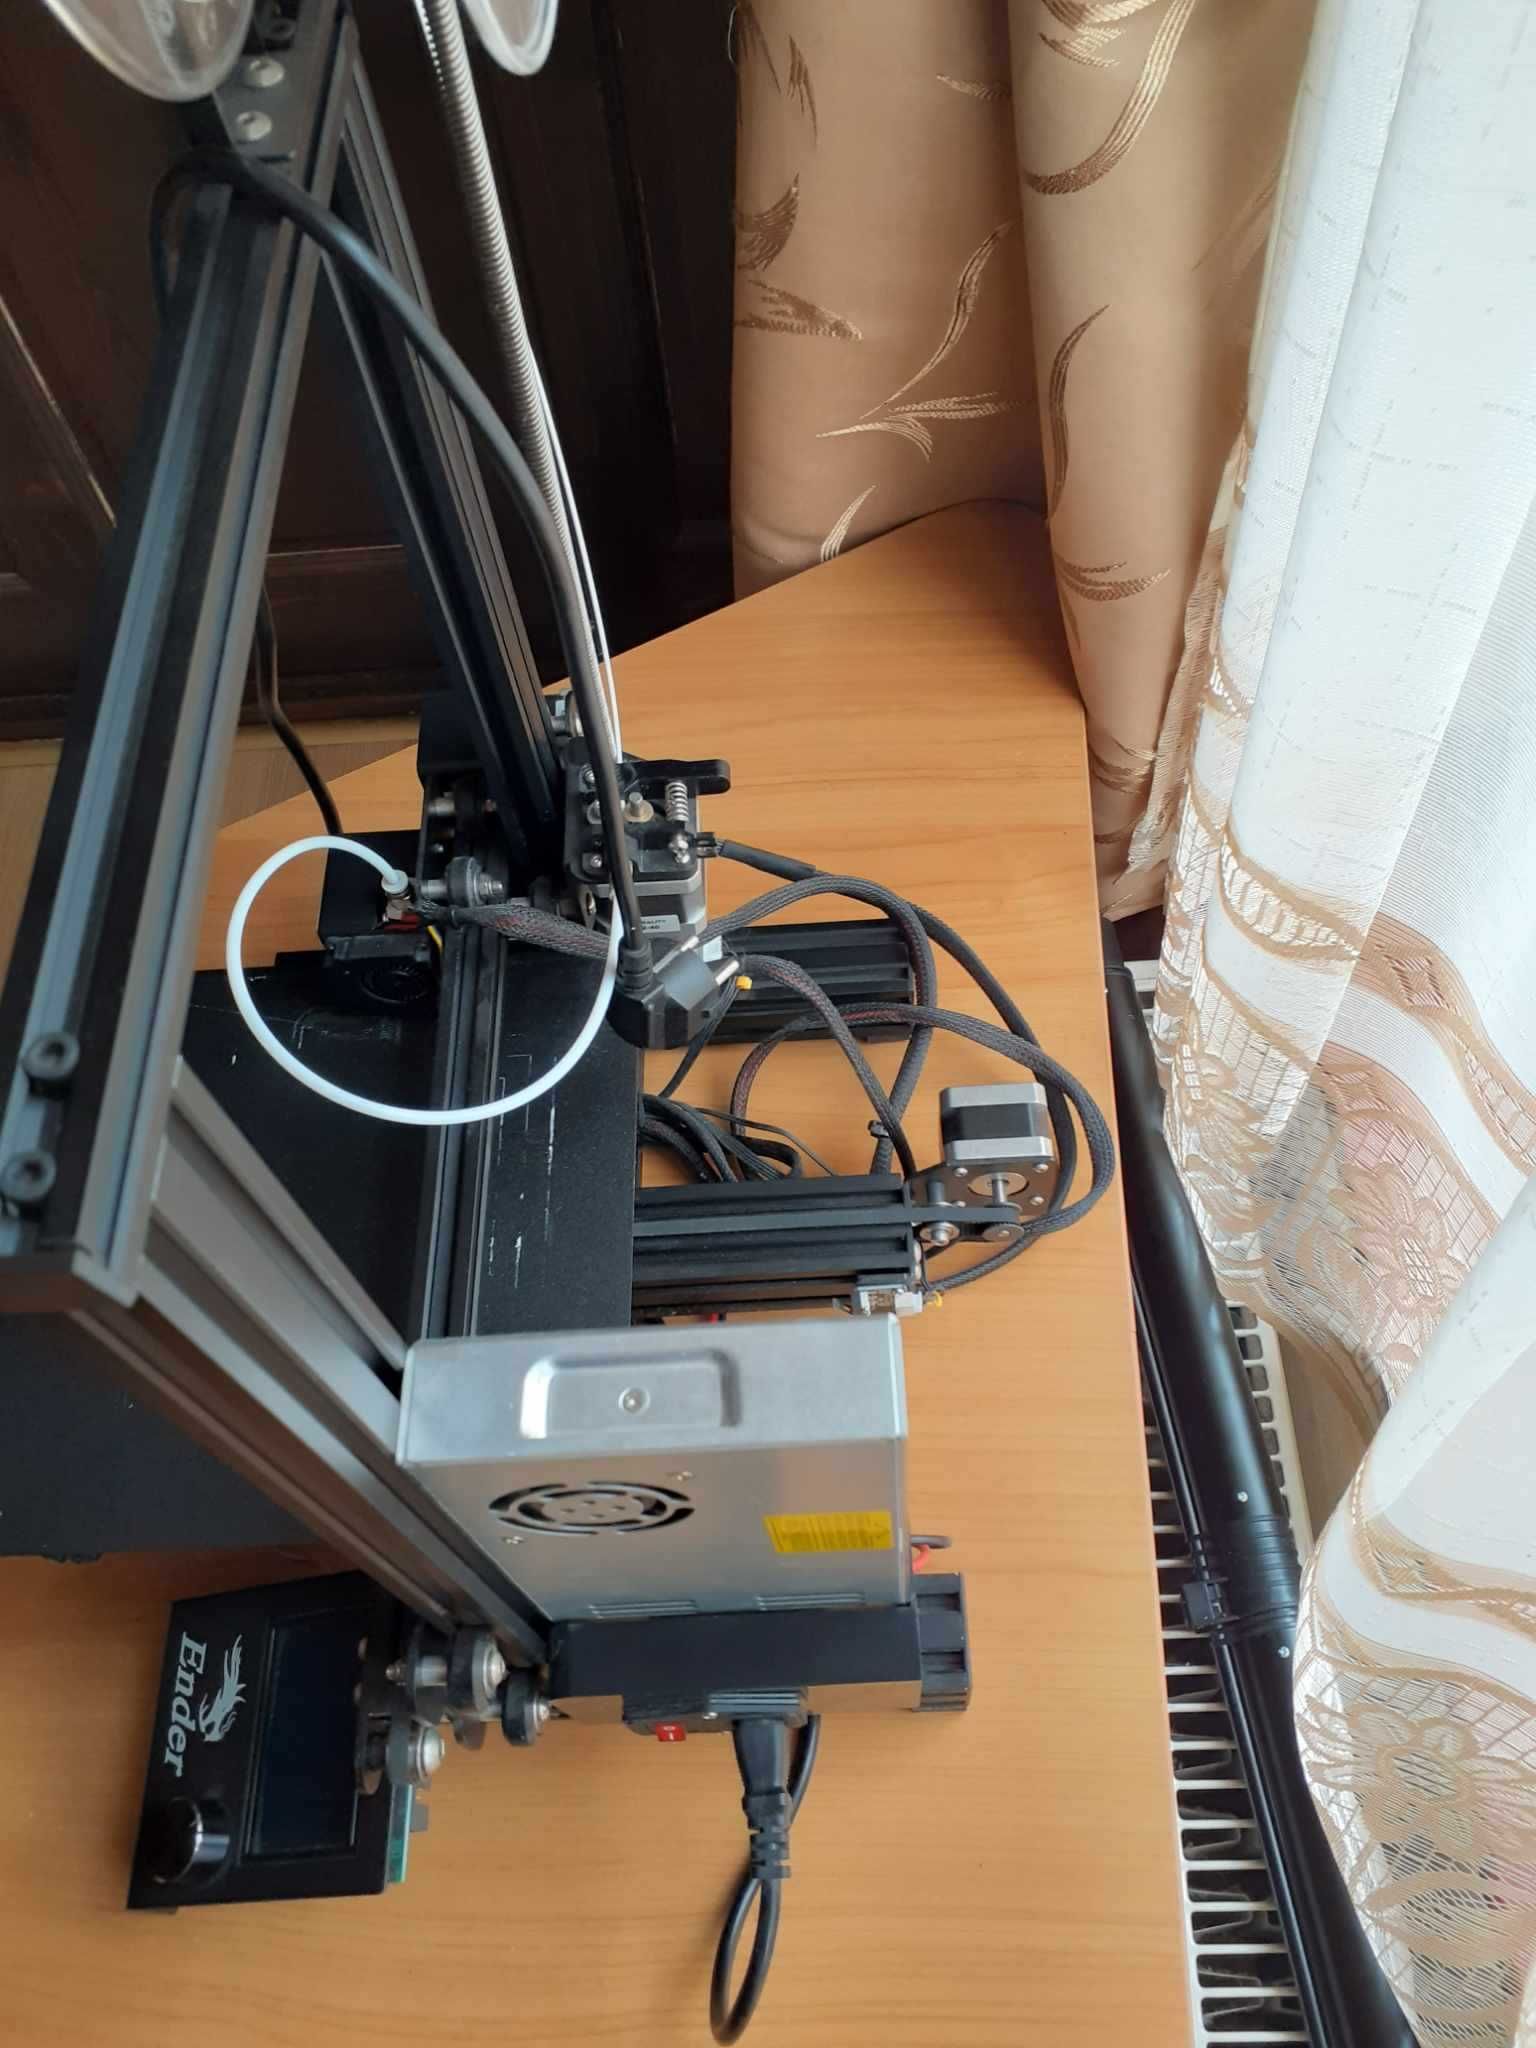 Imprimanta 3D Creality Ender 3 Pro